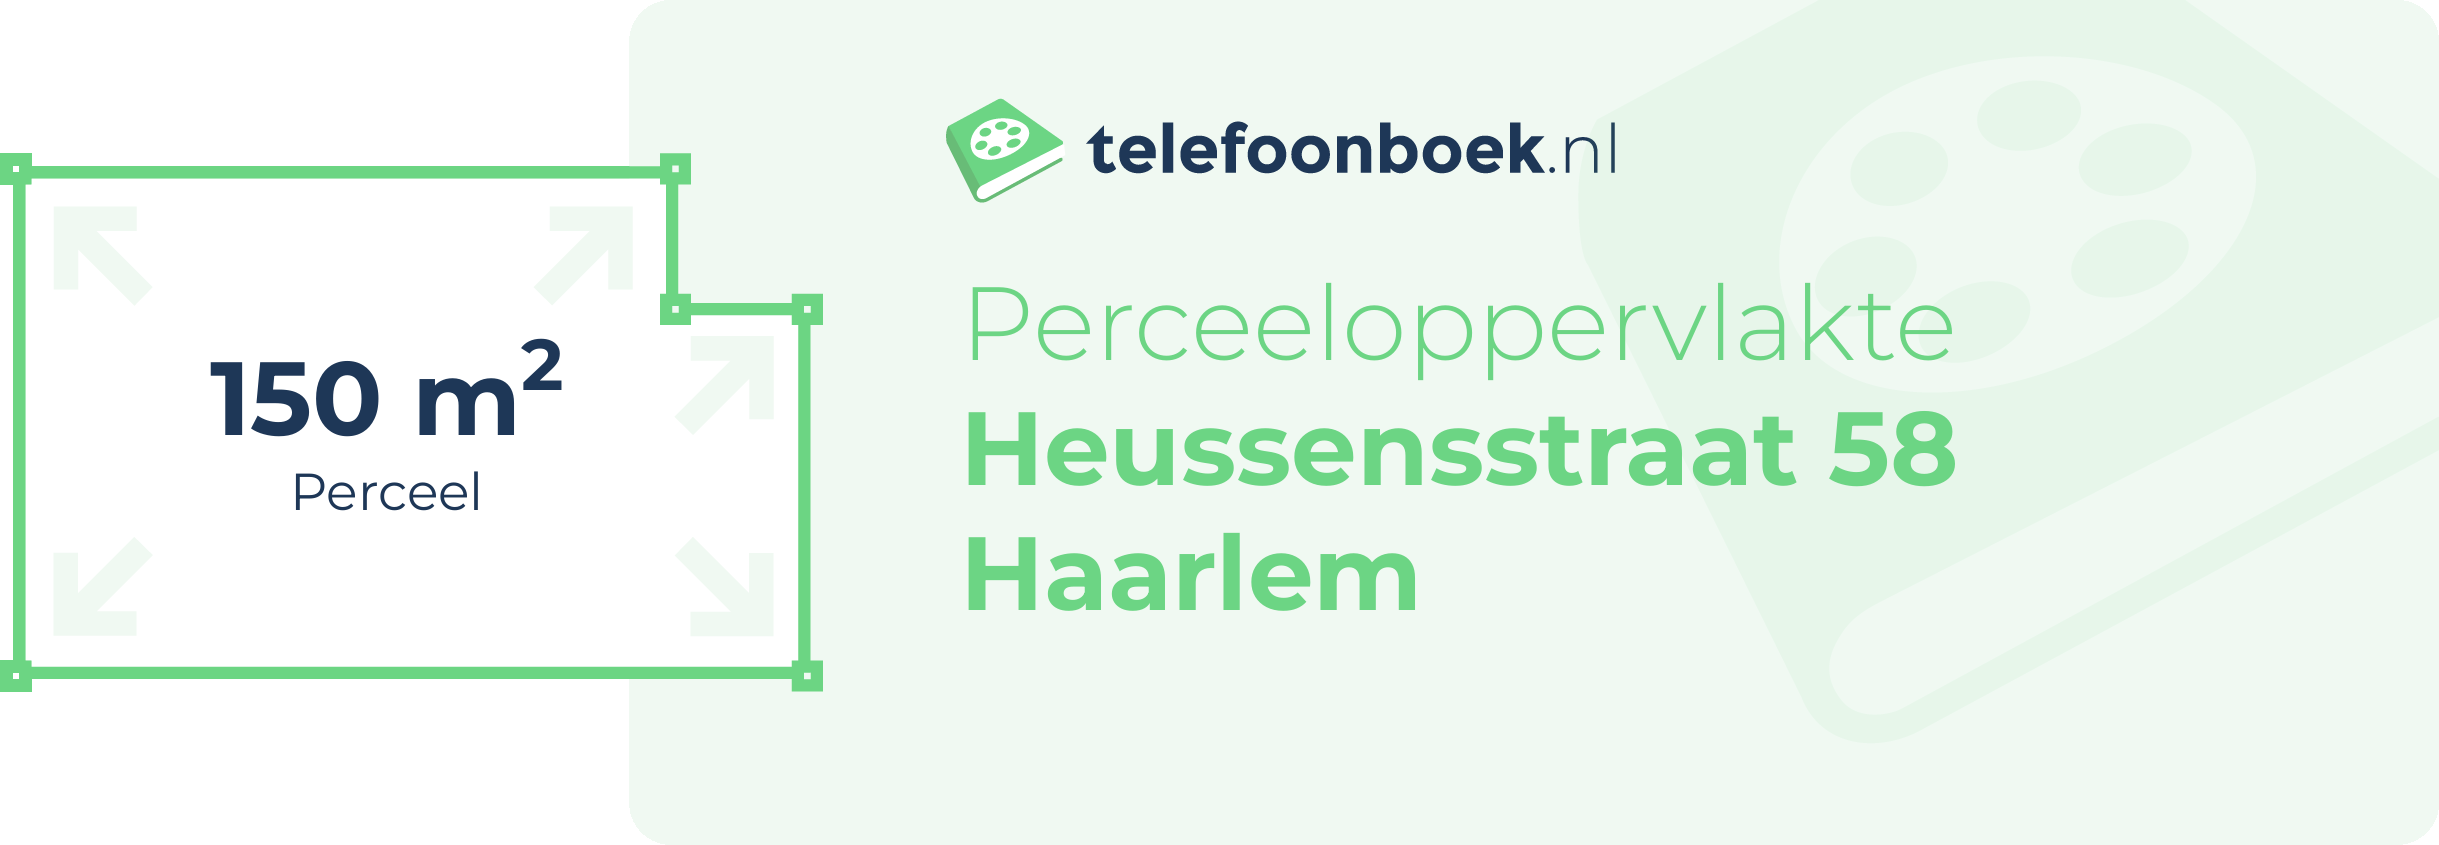 Perceeloppervlakte Heussensstraat 58 Haarlem